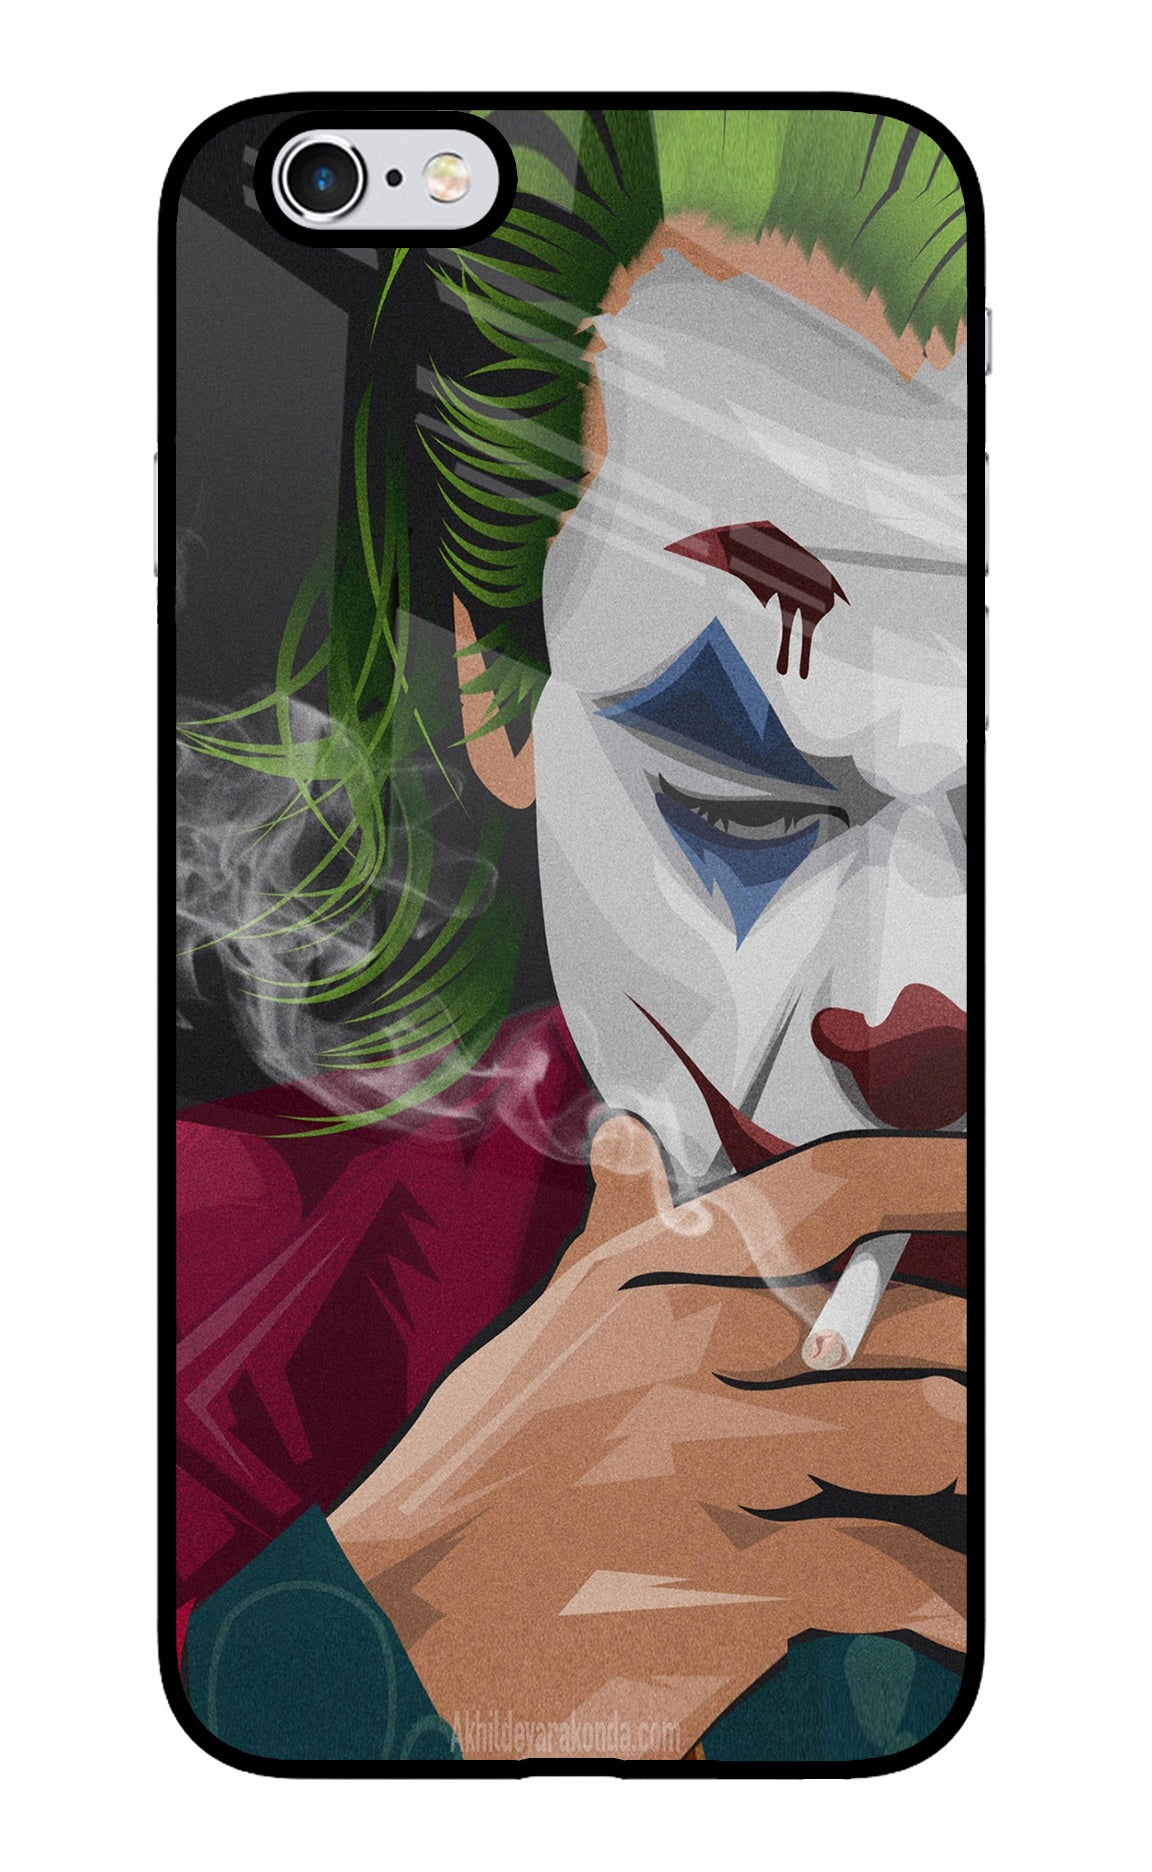 Joker Smoking iPhone 6/6s Back Cover